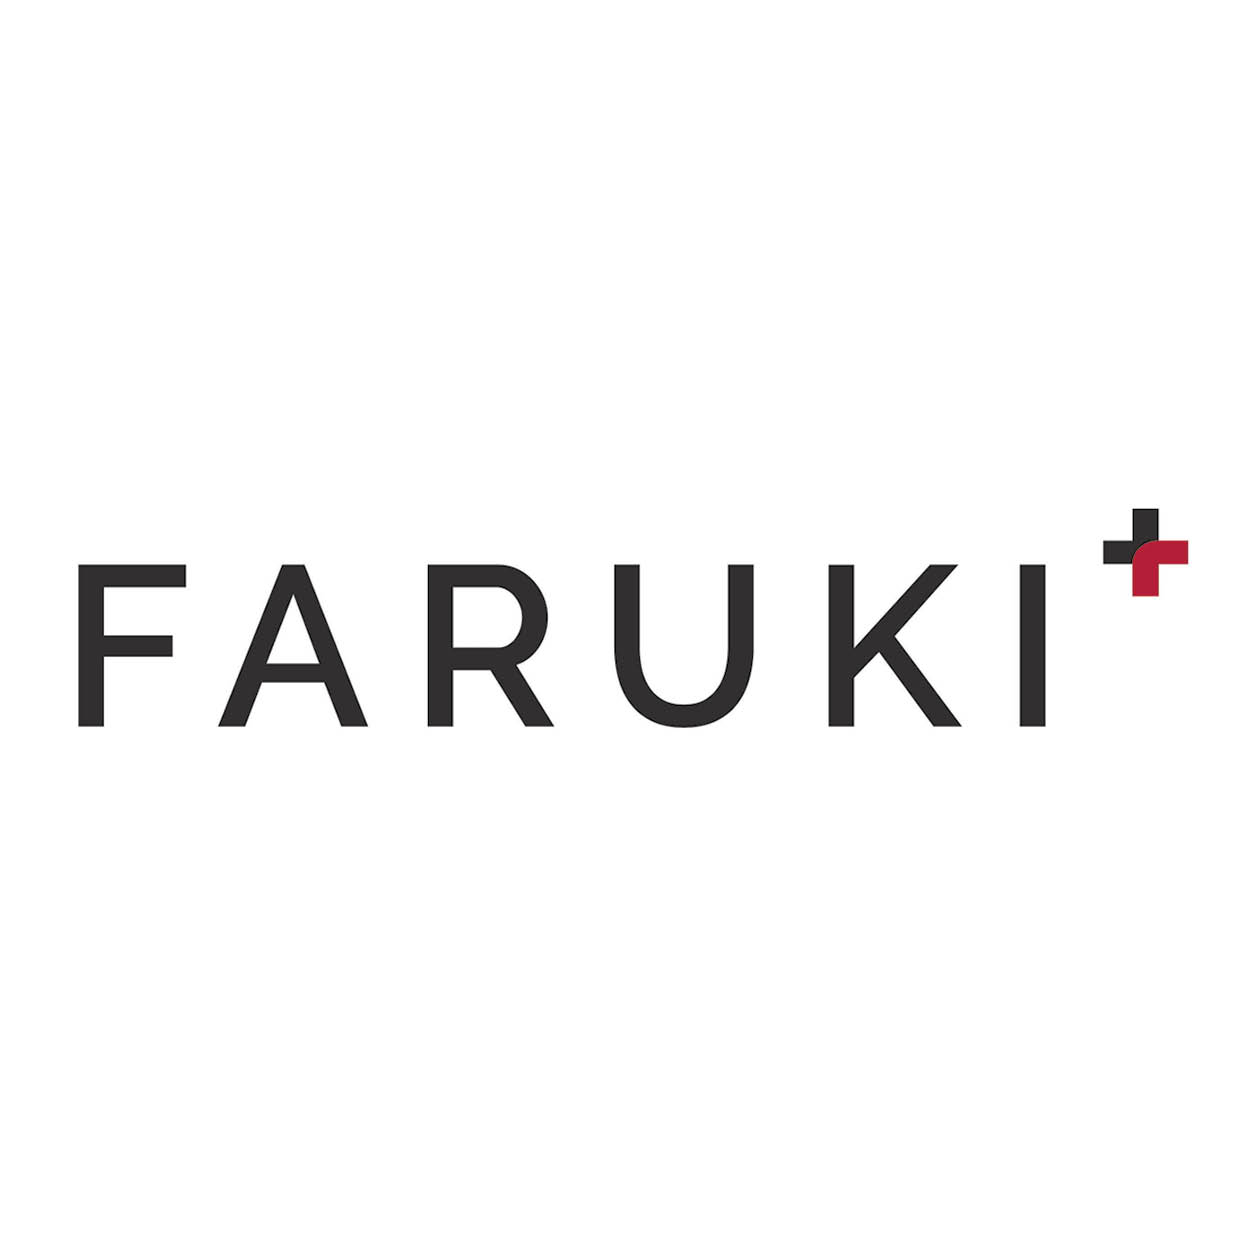 Faruki